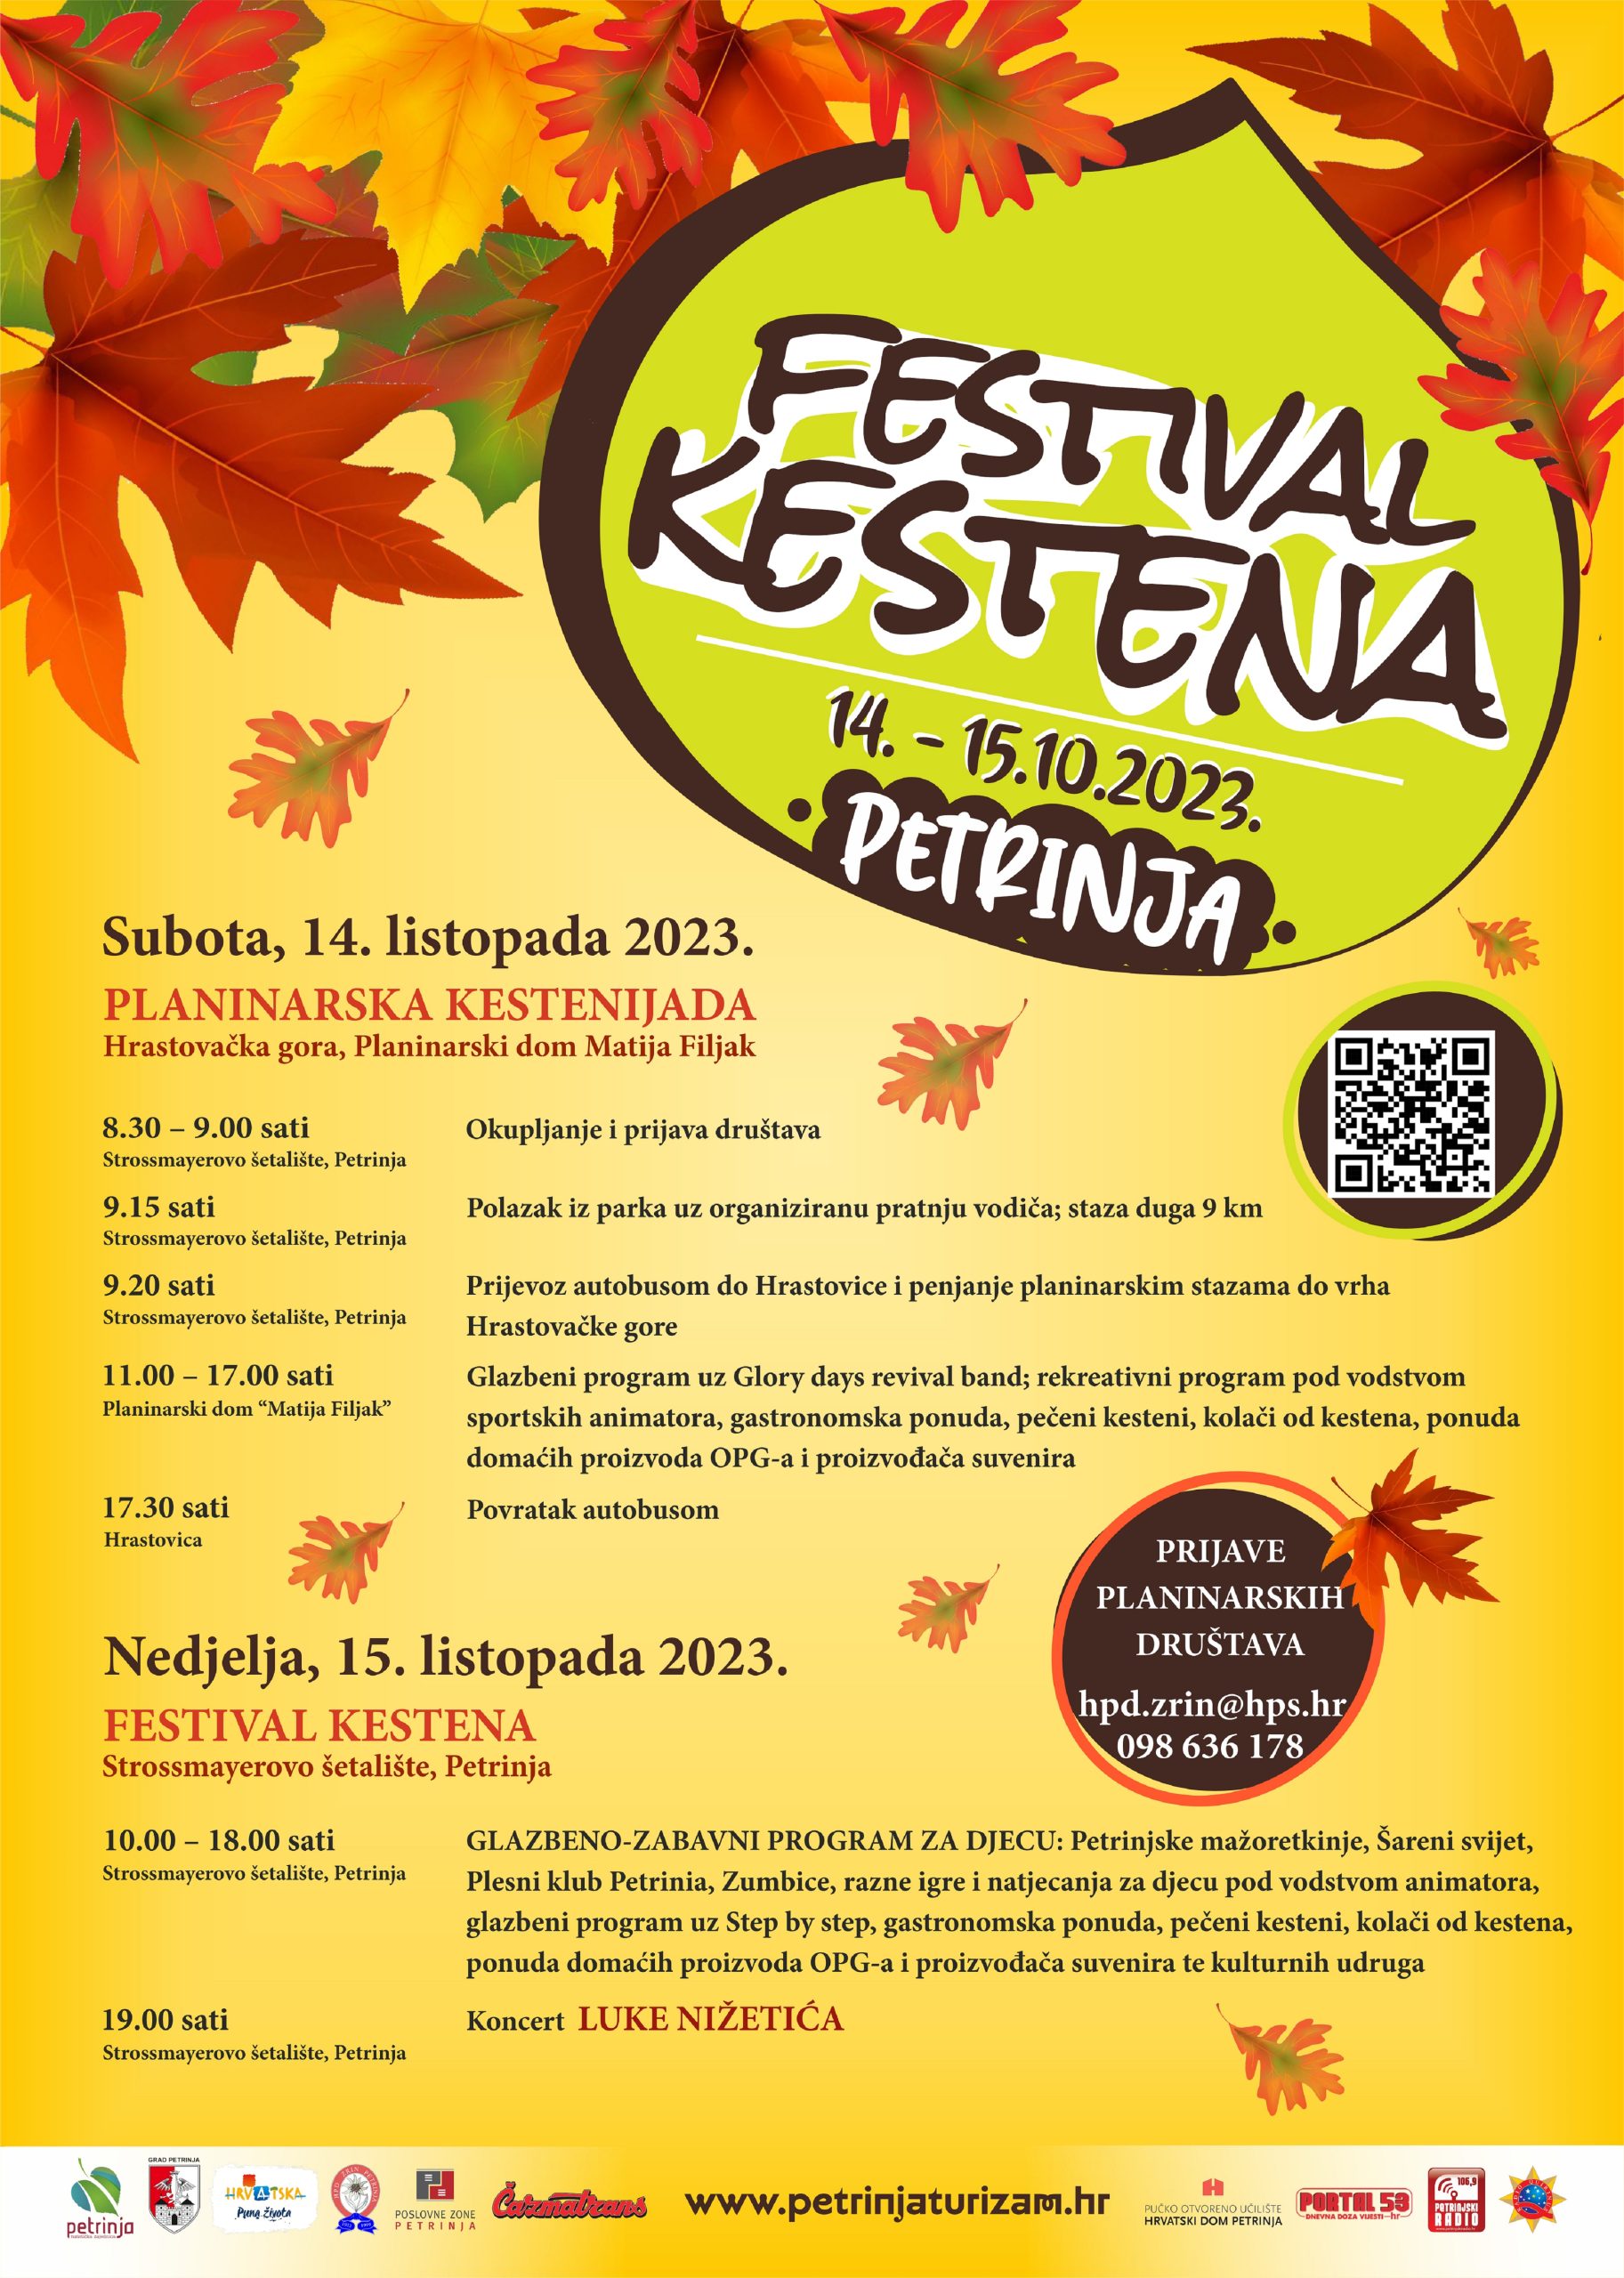 You are currently viewing Festival kestena u Petrinji